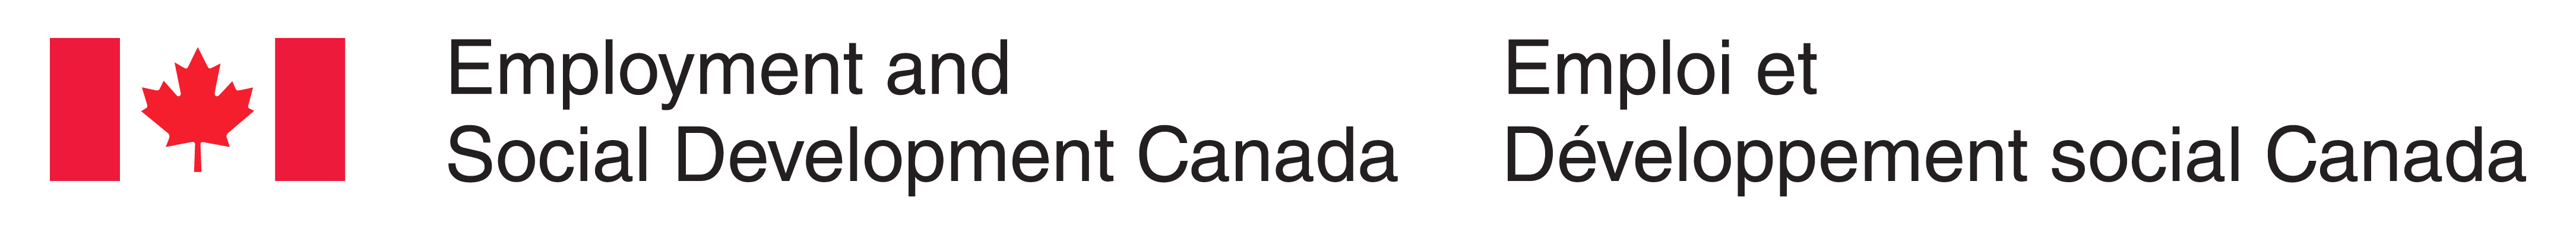 Employment and Social Development Canada Banner